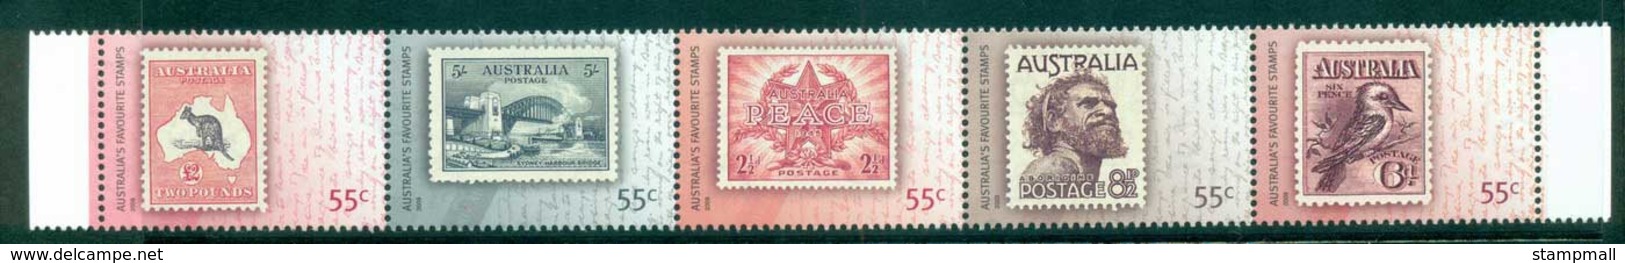 Australia 2009 Australia's Favourite Stamps Srt 5 MUH Lot34233 - Mint Stamps